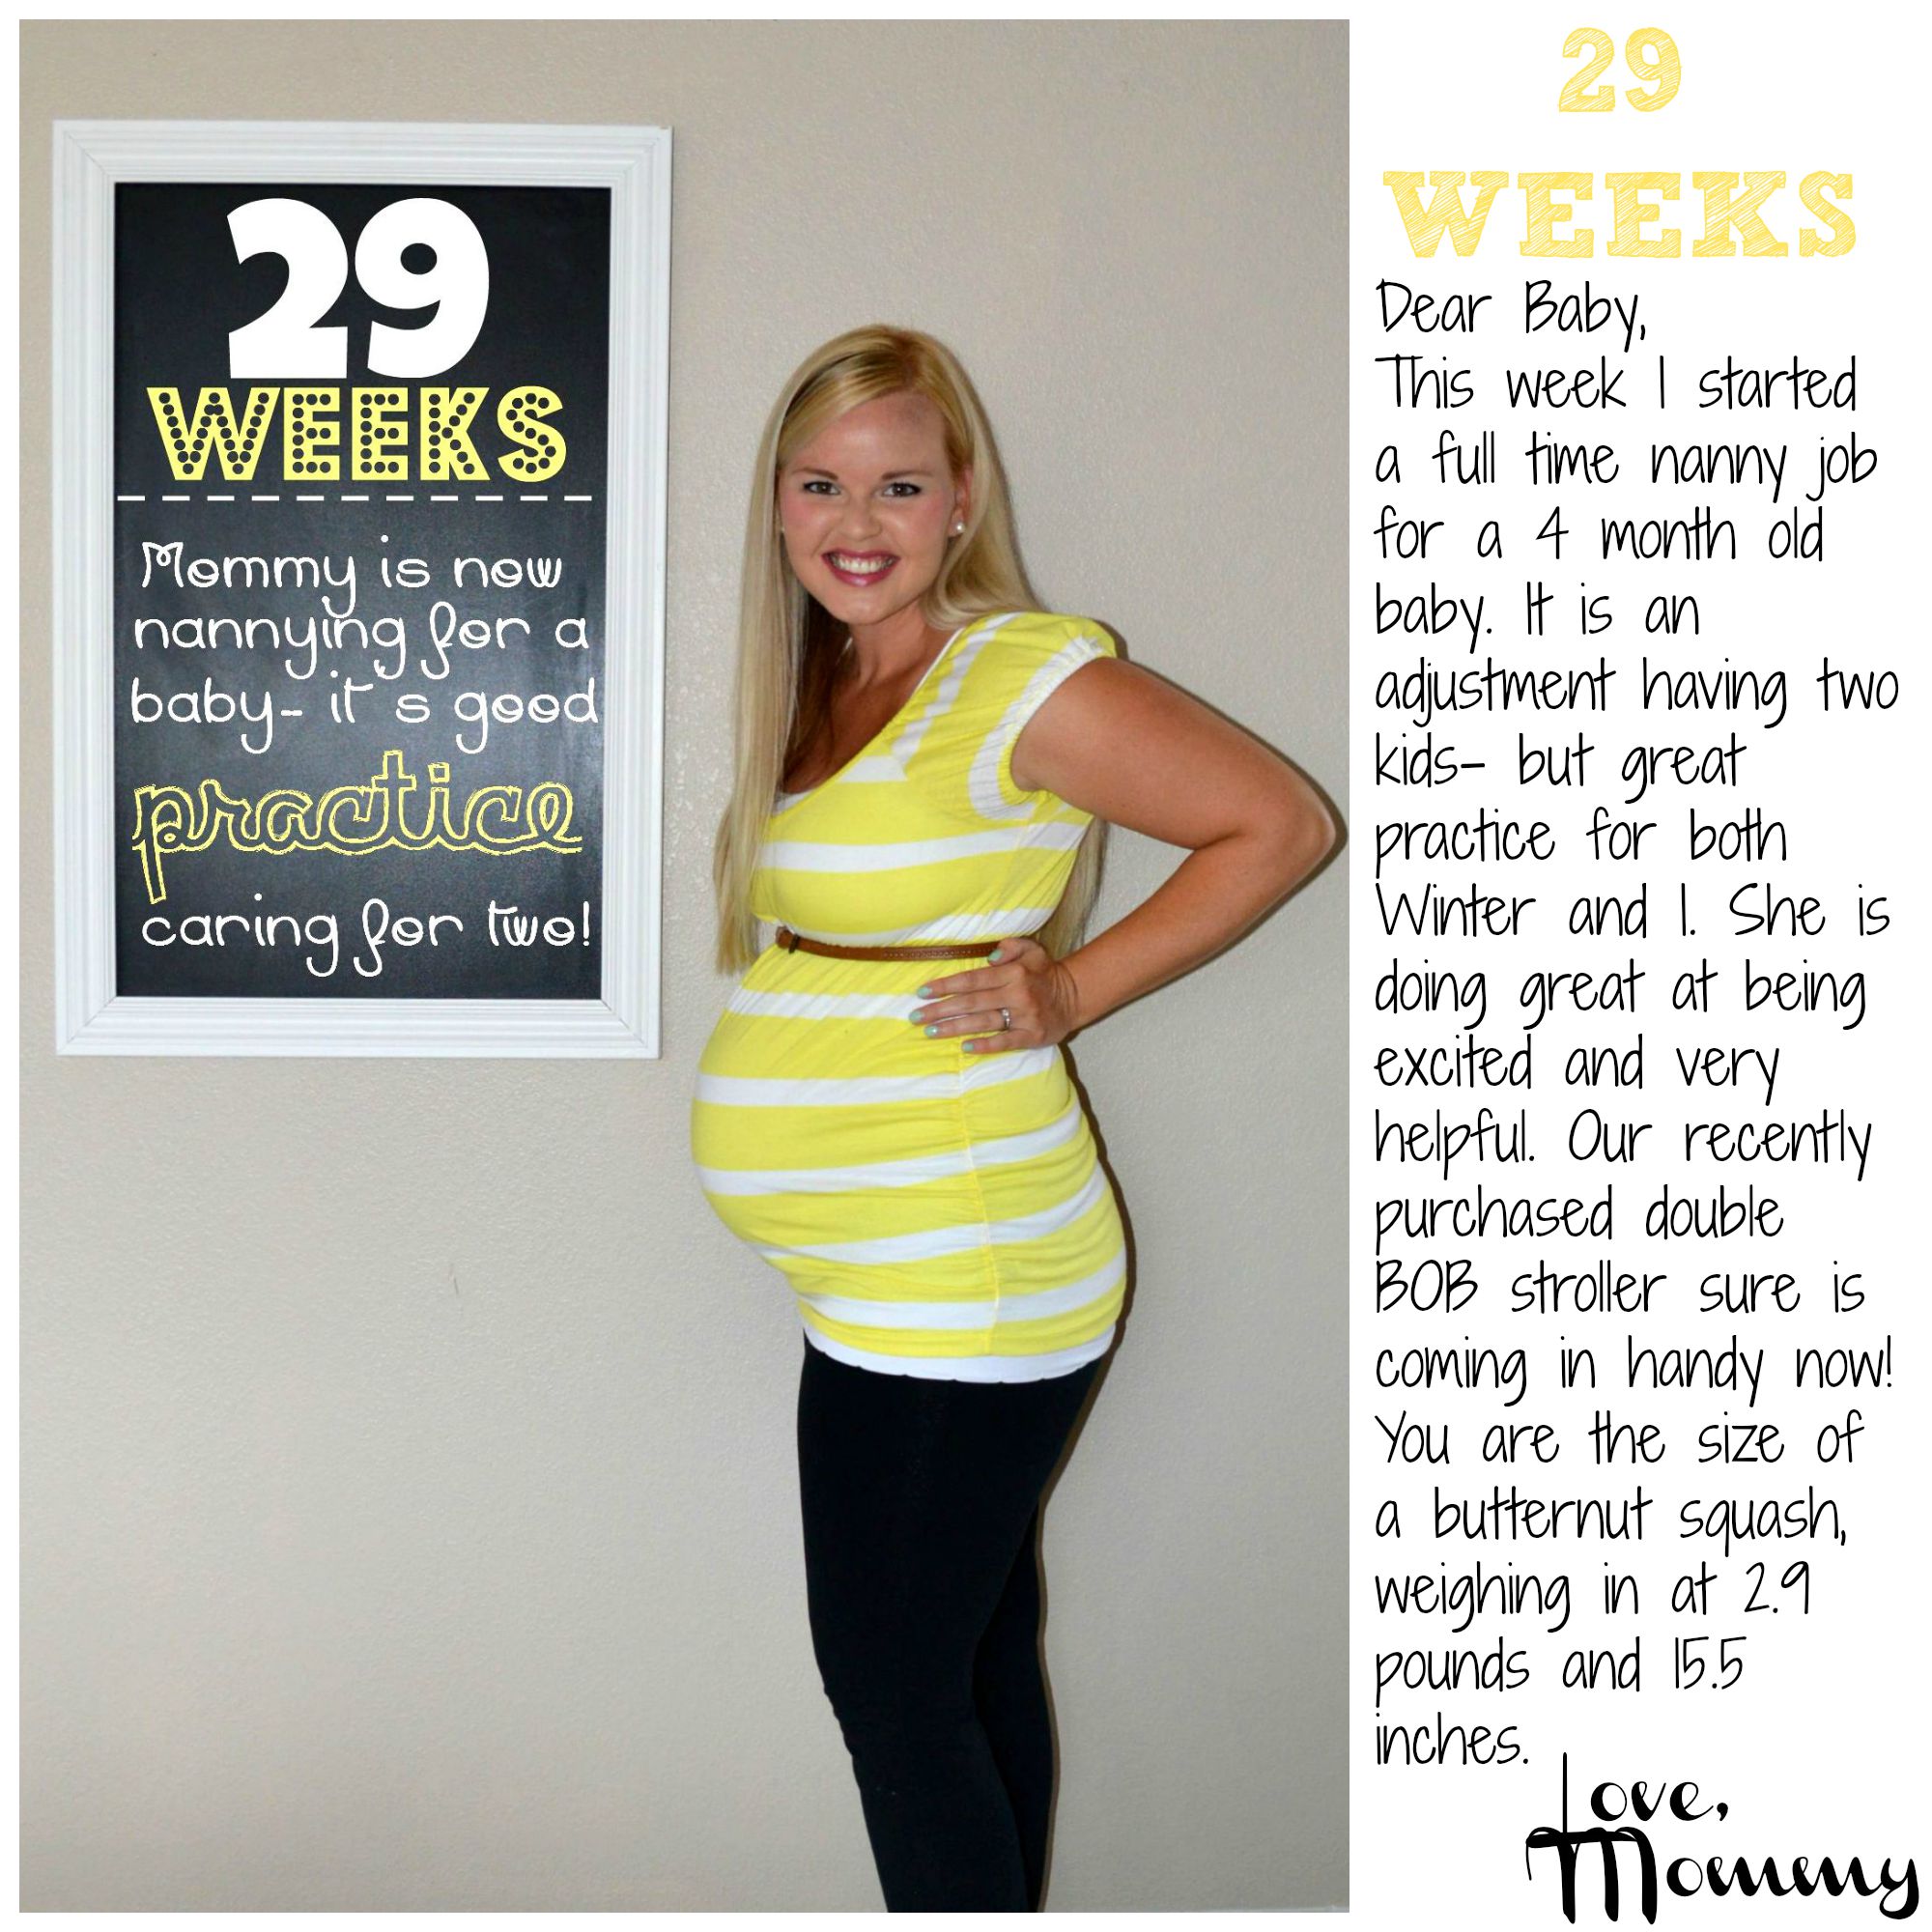 29 weeks fetus size